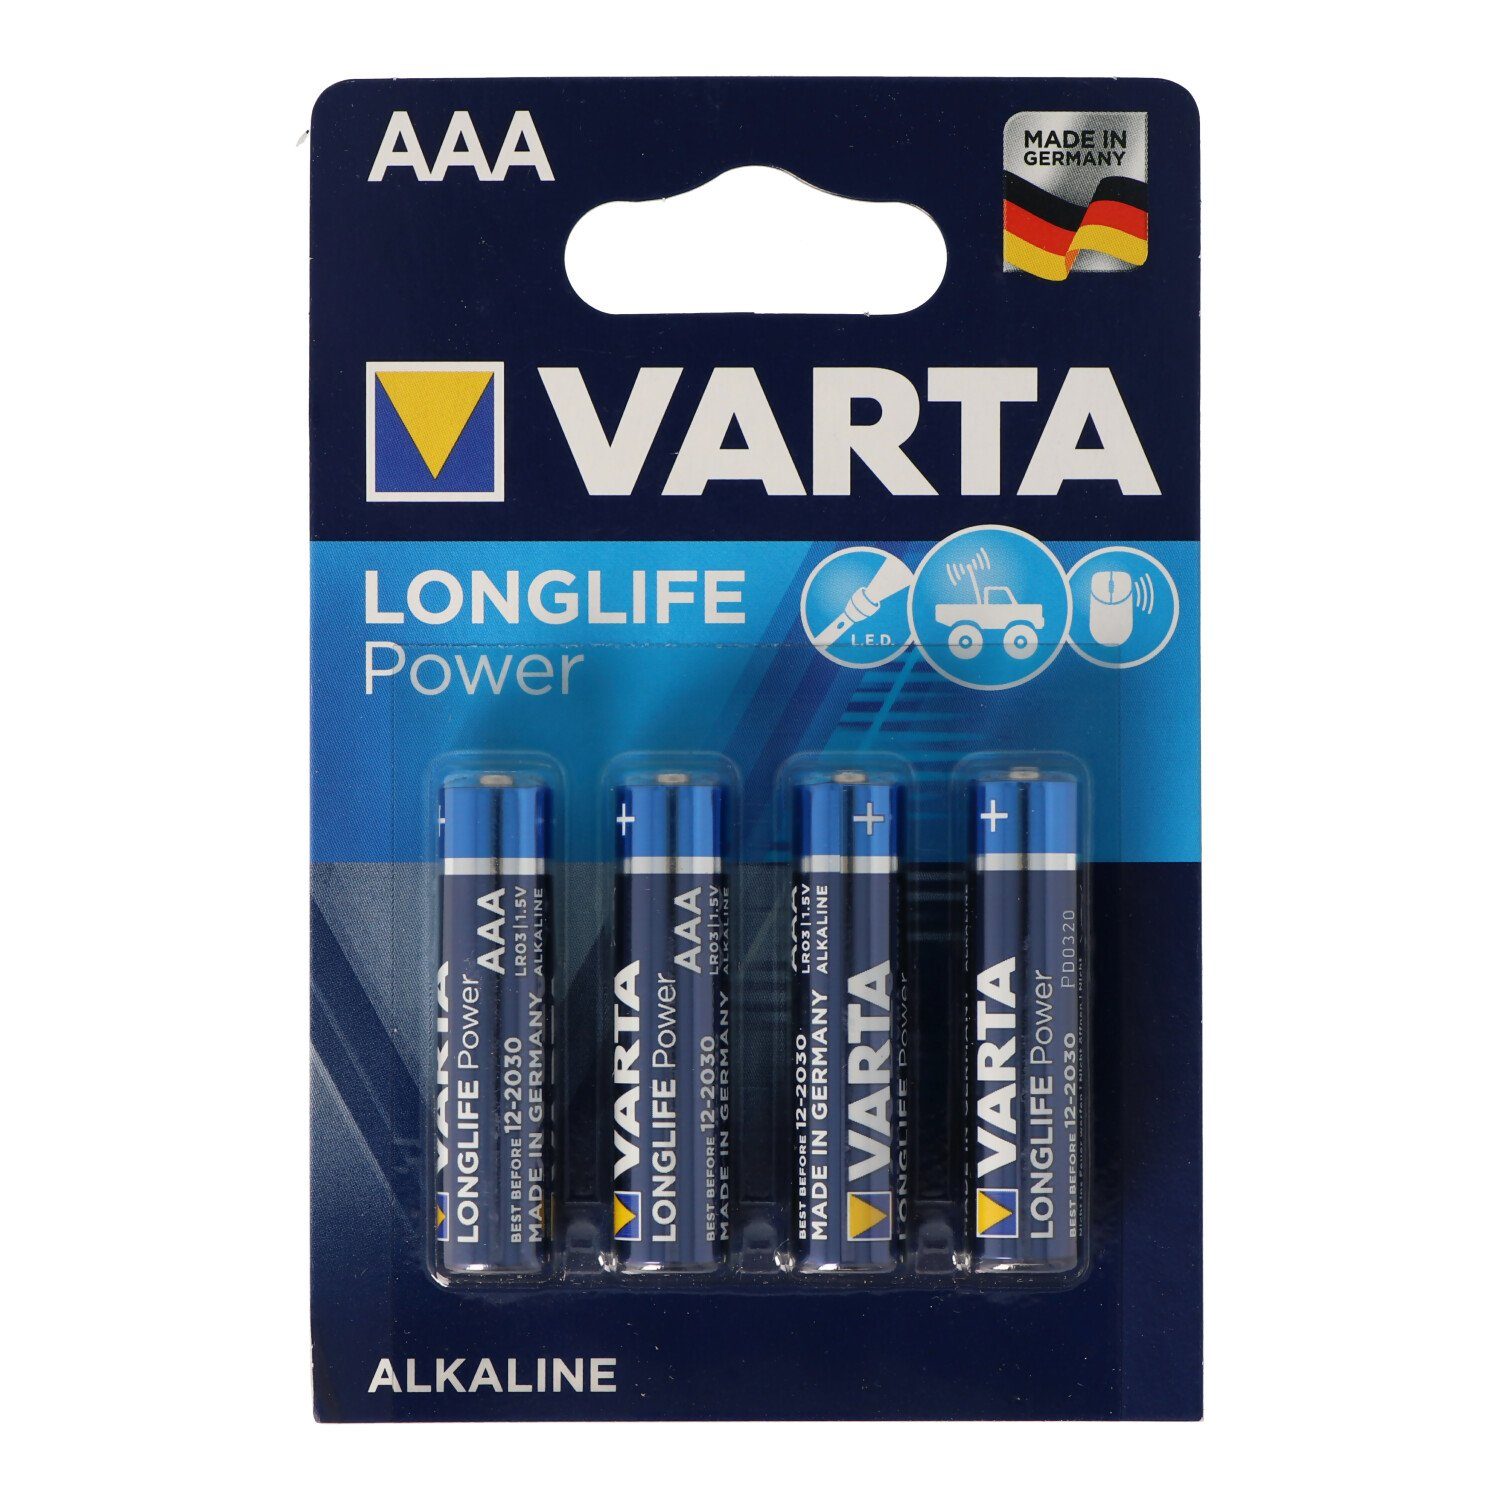 Micro Power Batterie, 10x 4903 AAA High Energy) (1,5 Varta (ehem. Batterien V) VARTA Longlife